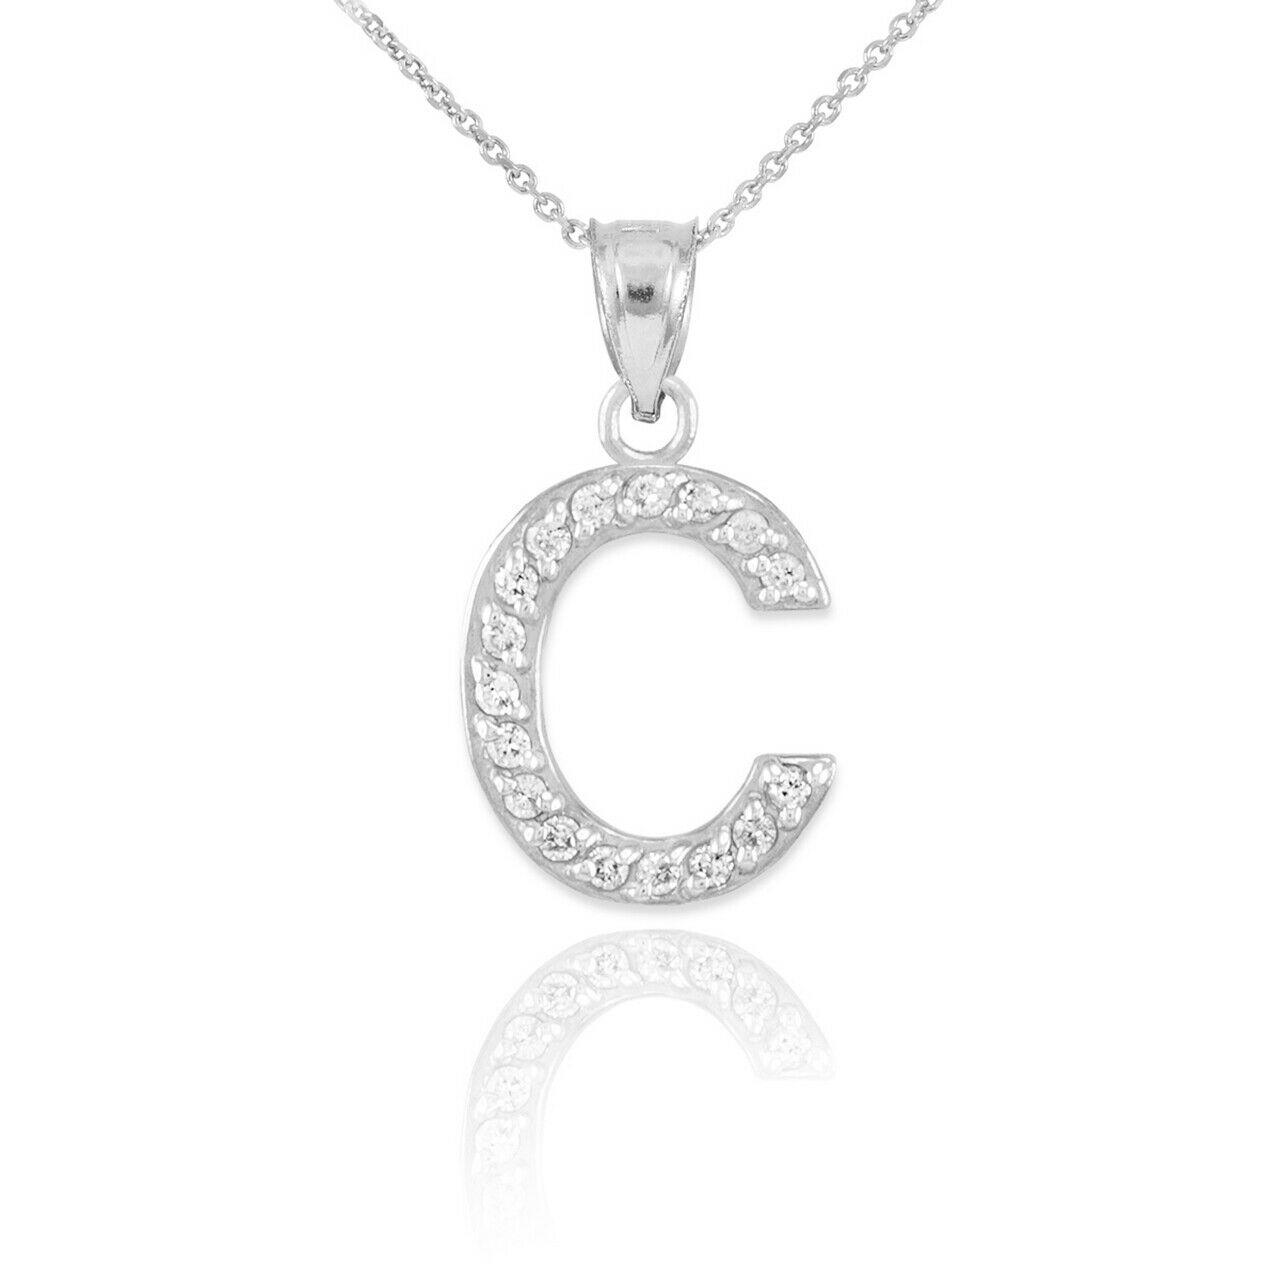 925 Sterling Silver Letter "C" Initial CZ Monogram Pendant Necklace 16 18 20 22"